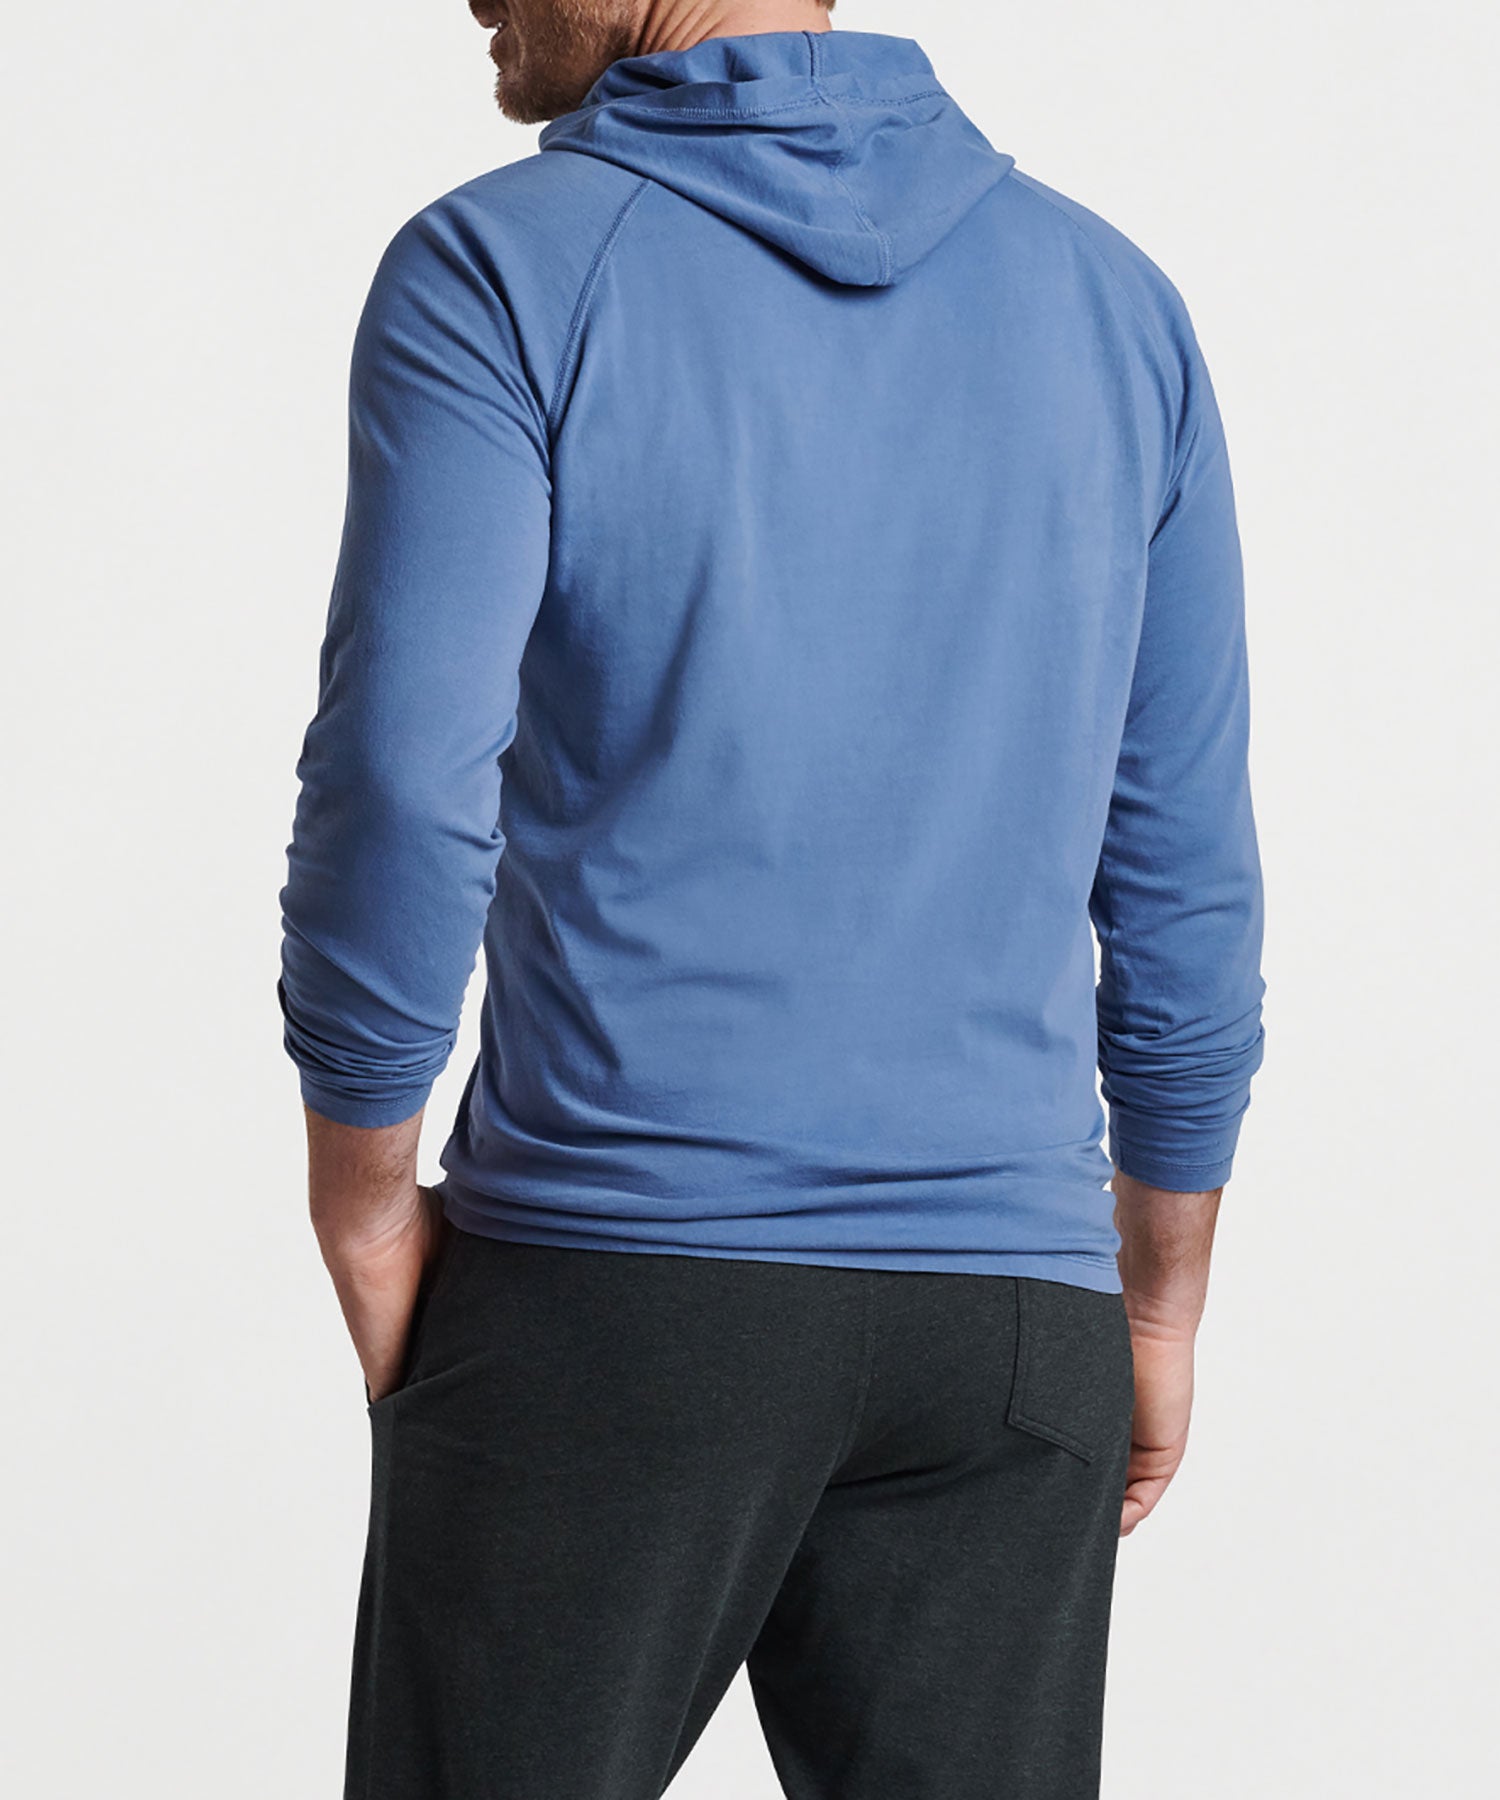 Lava Wash Garment Dyed Hoodie in Ocean Blue by Peter Millar - Hansen's  Clothing